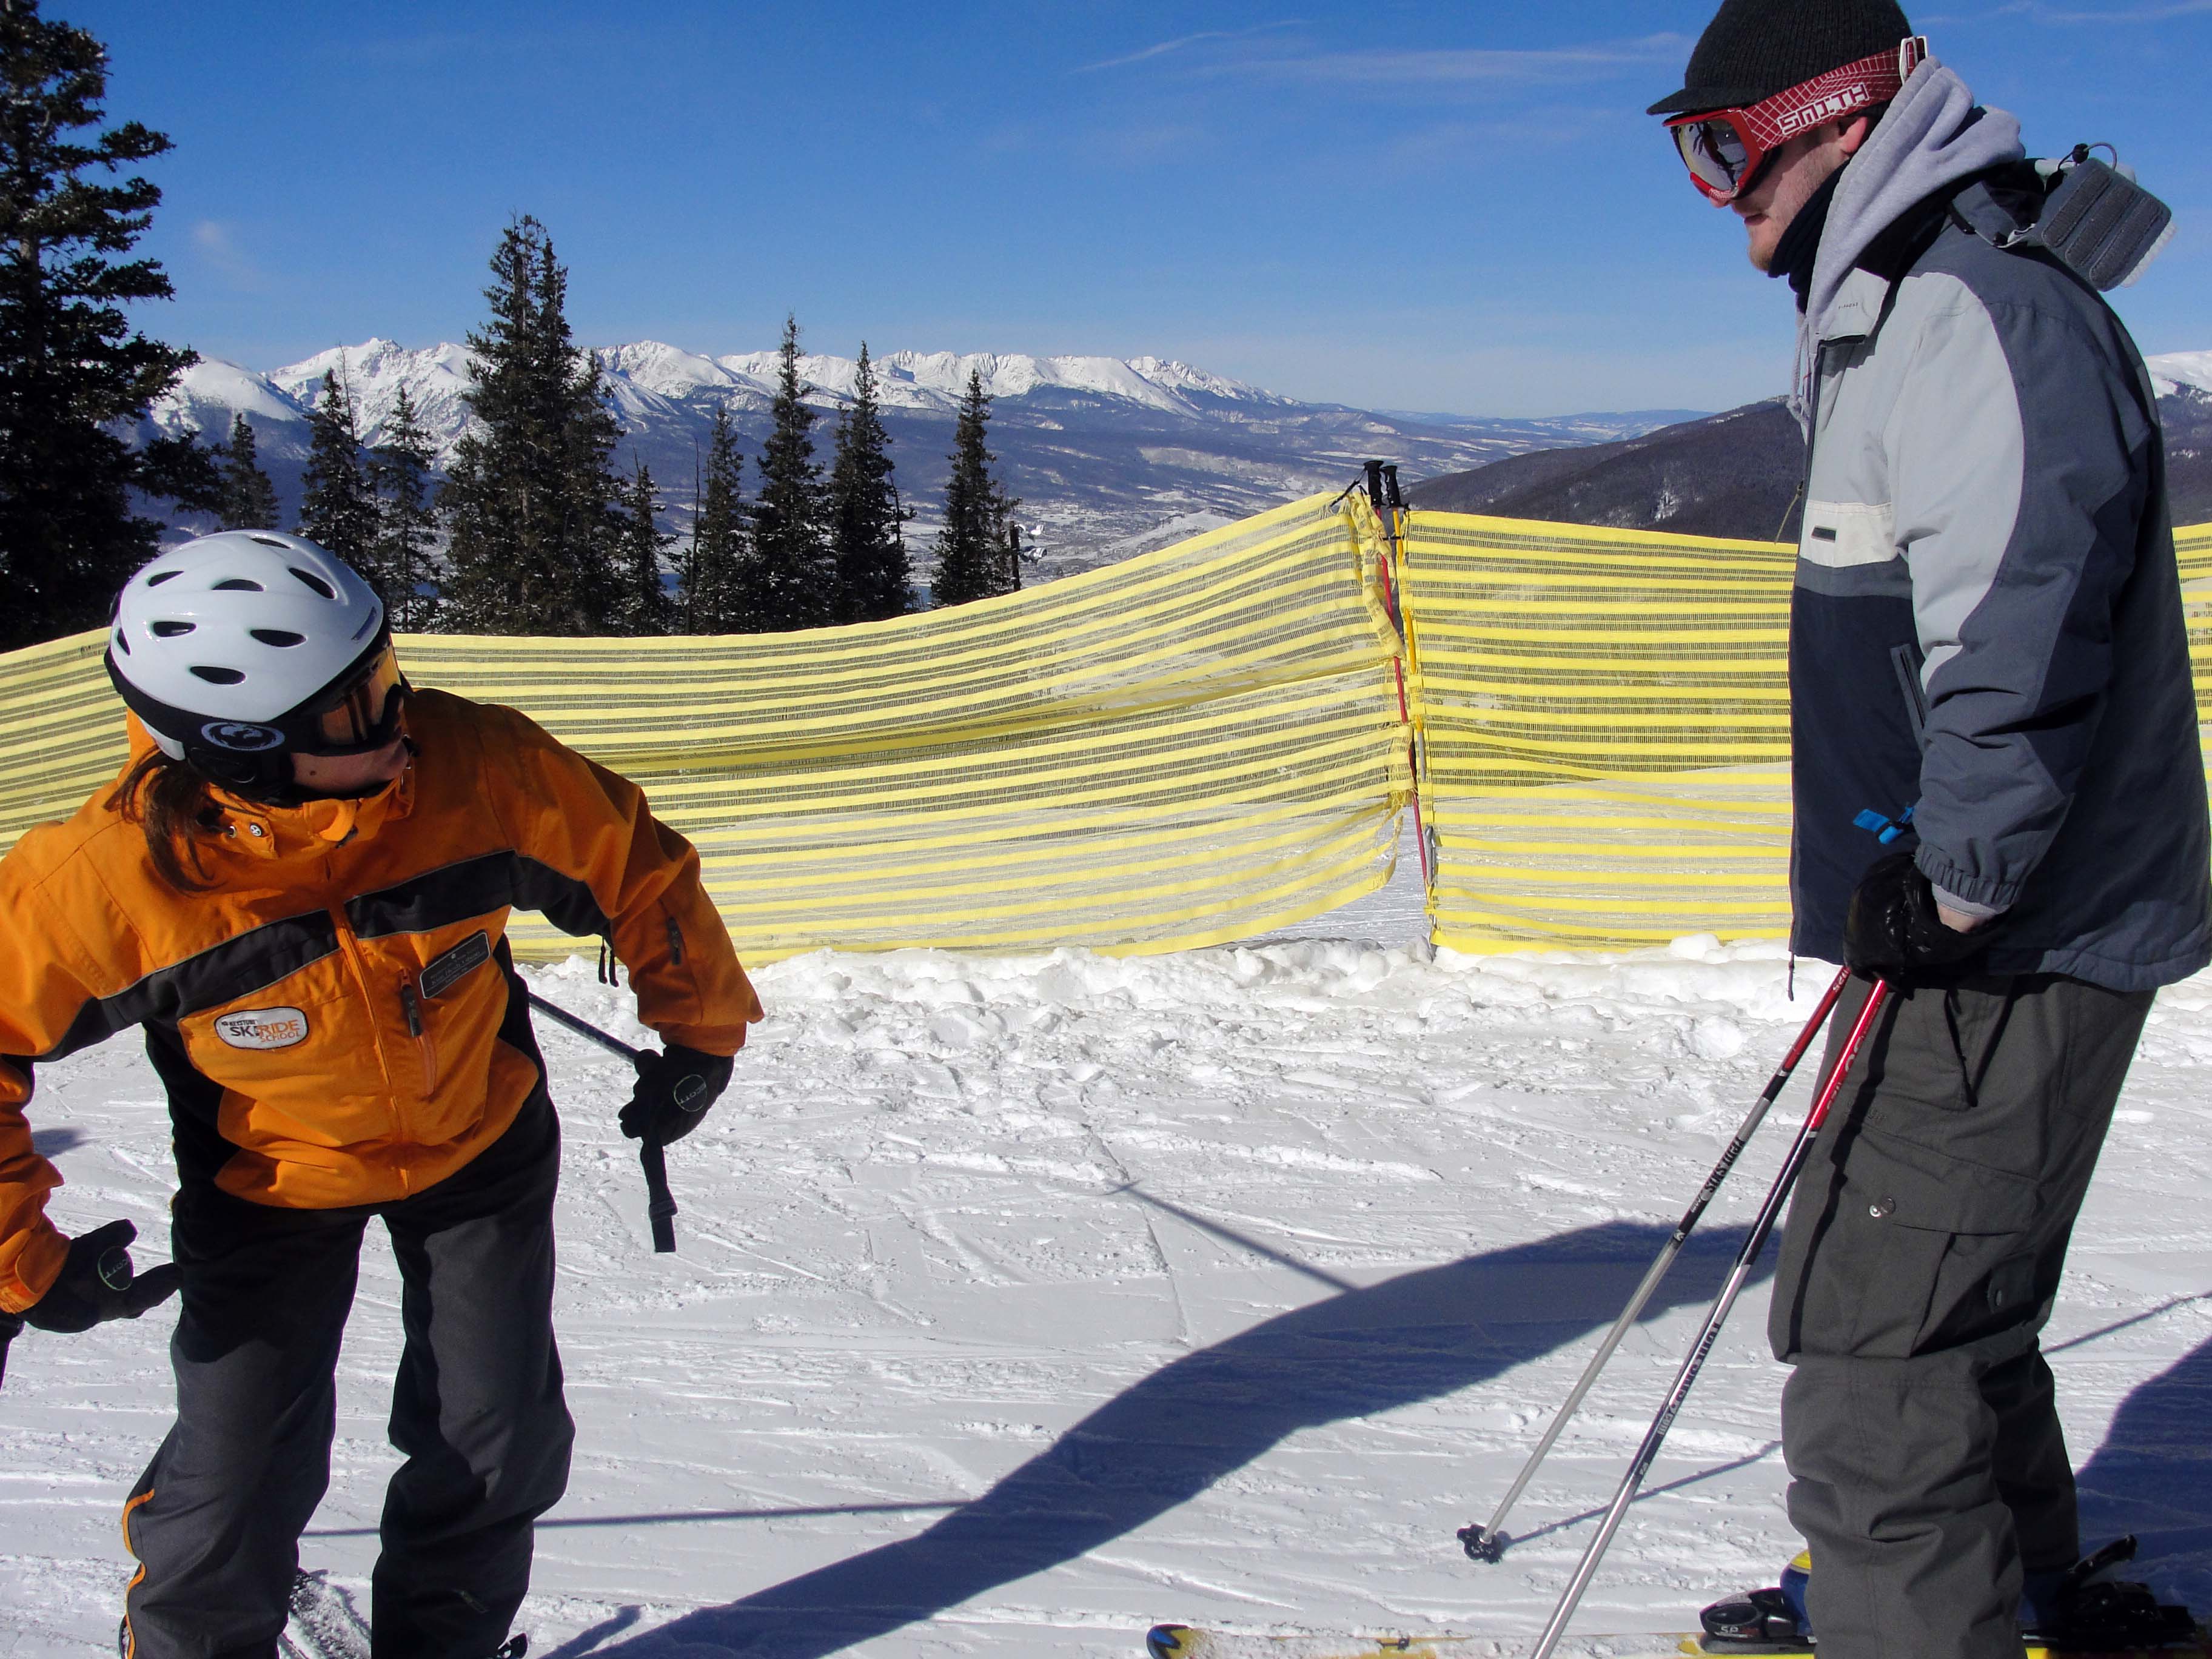 Kim teaching Bryan skiing techniques